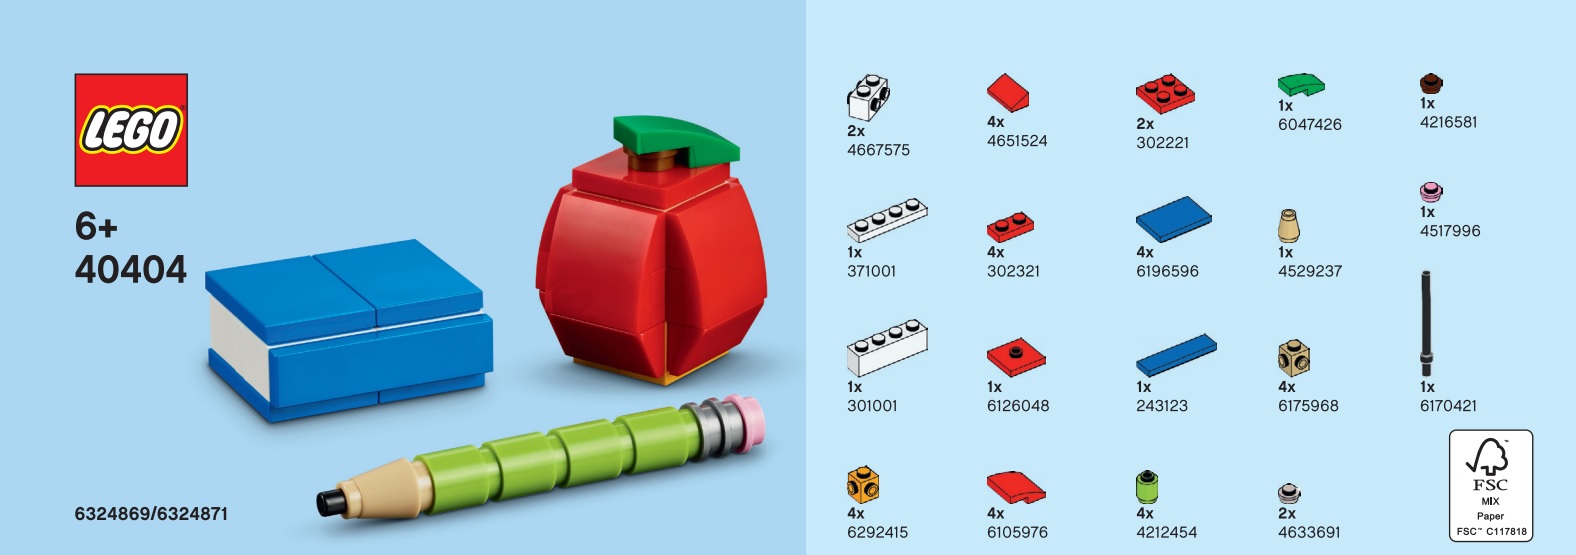 October 2020 Monthly Mini Model Build Instructions - LEGO Teacher's Day - Toys N Bricks